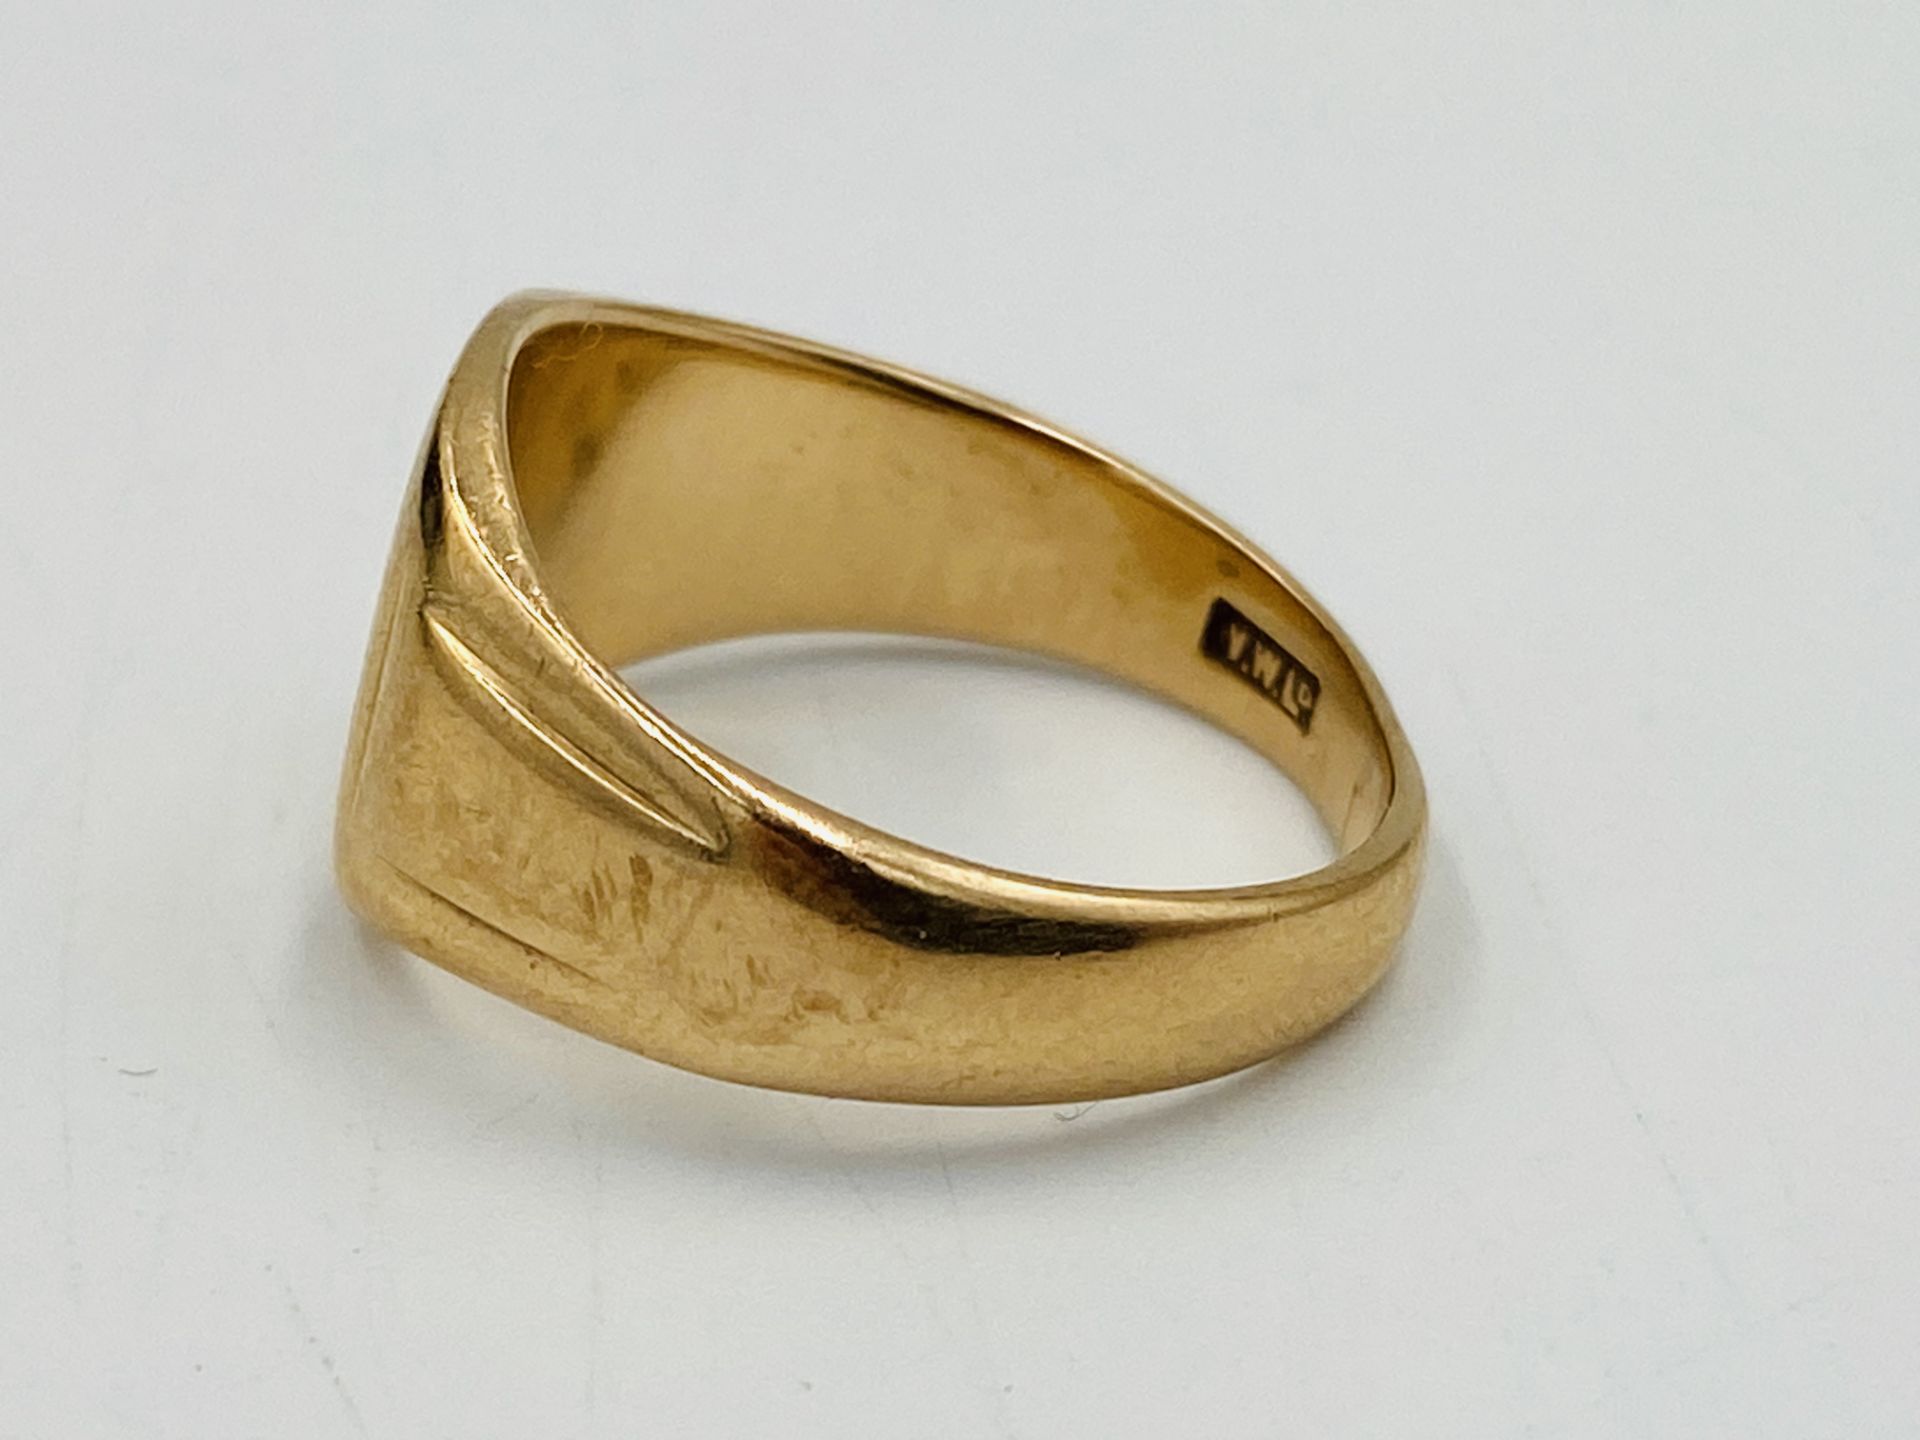 9ct gold signet ring - Image 3 of 5